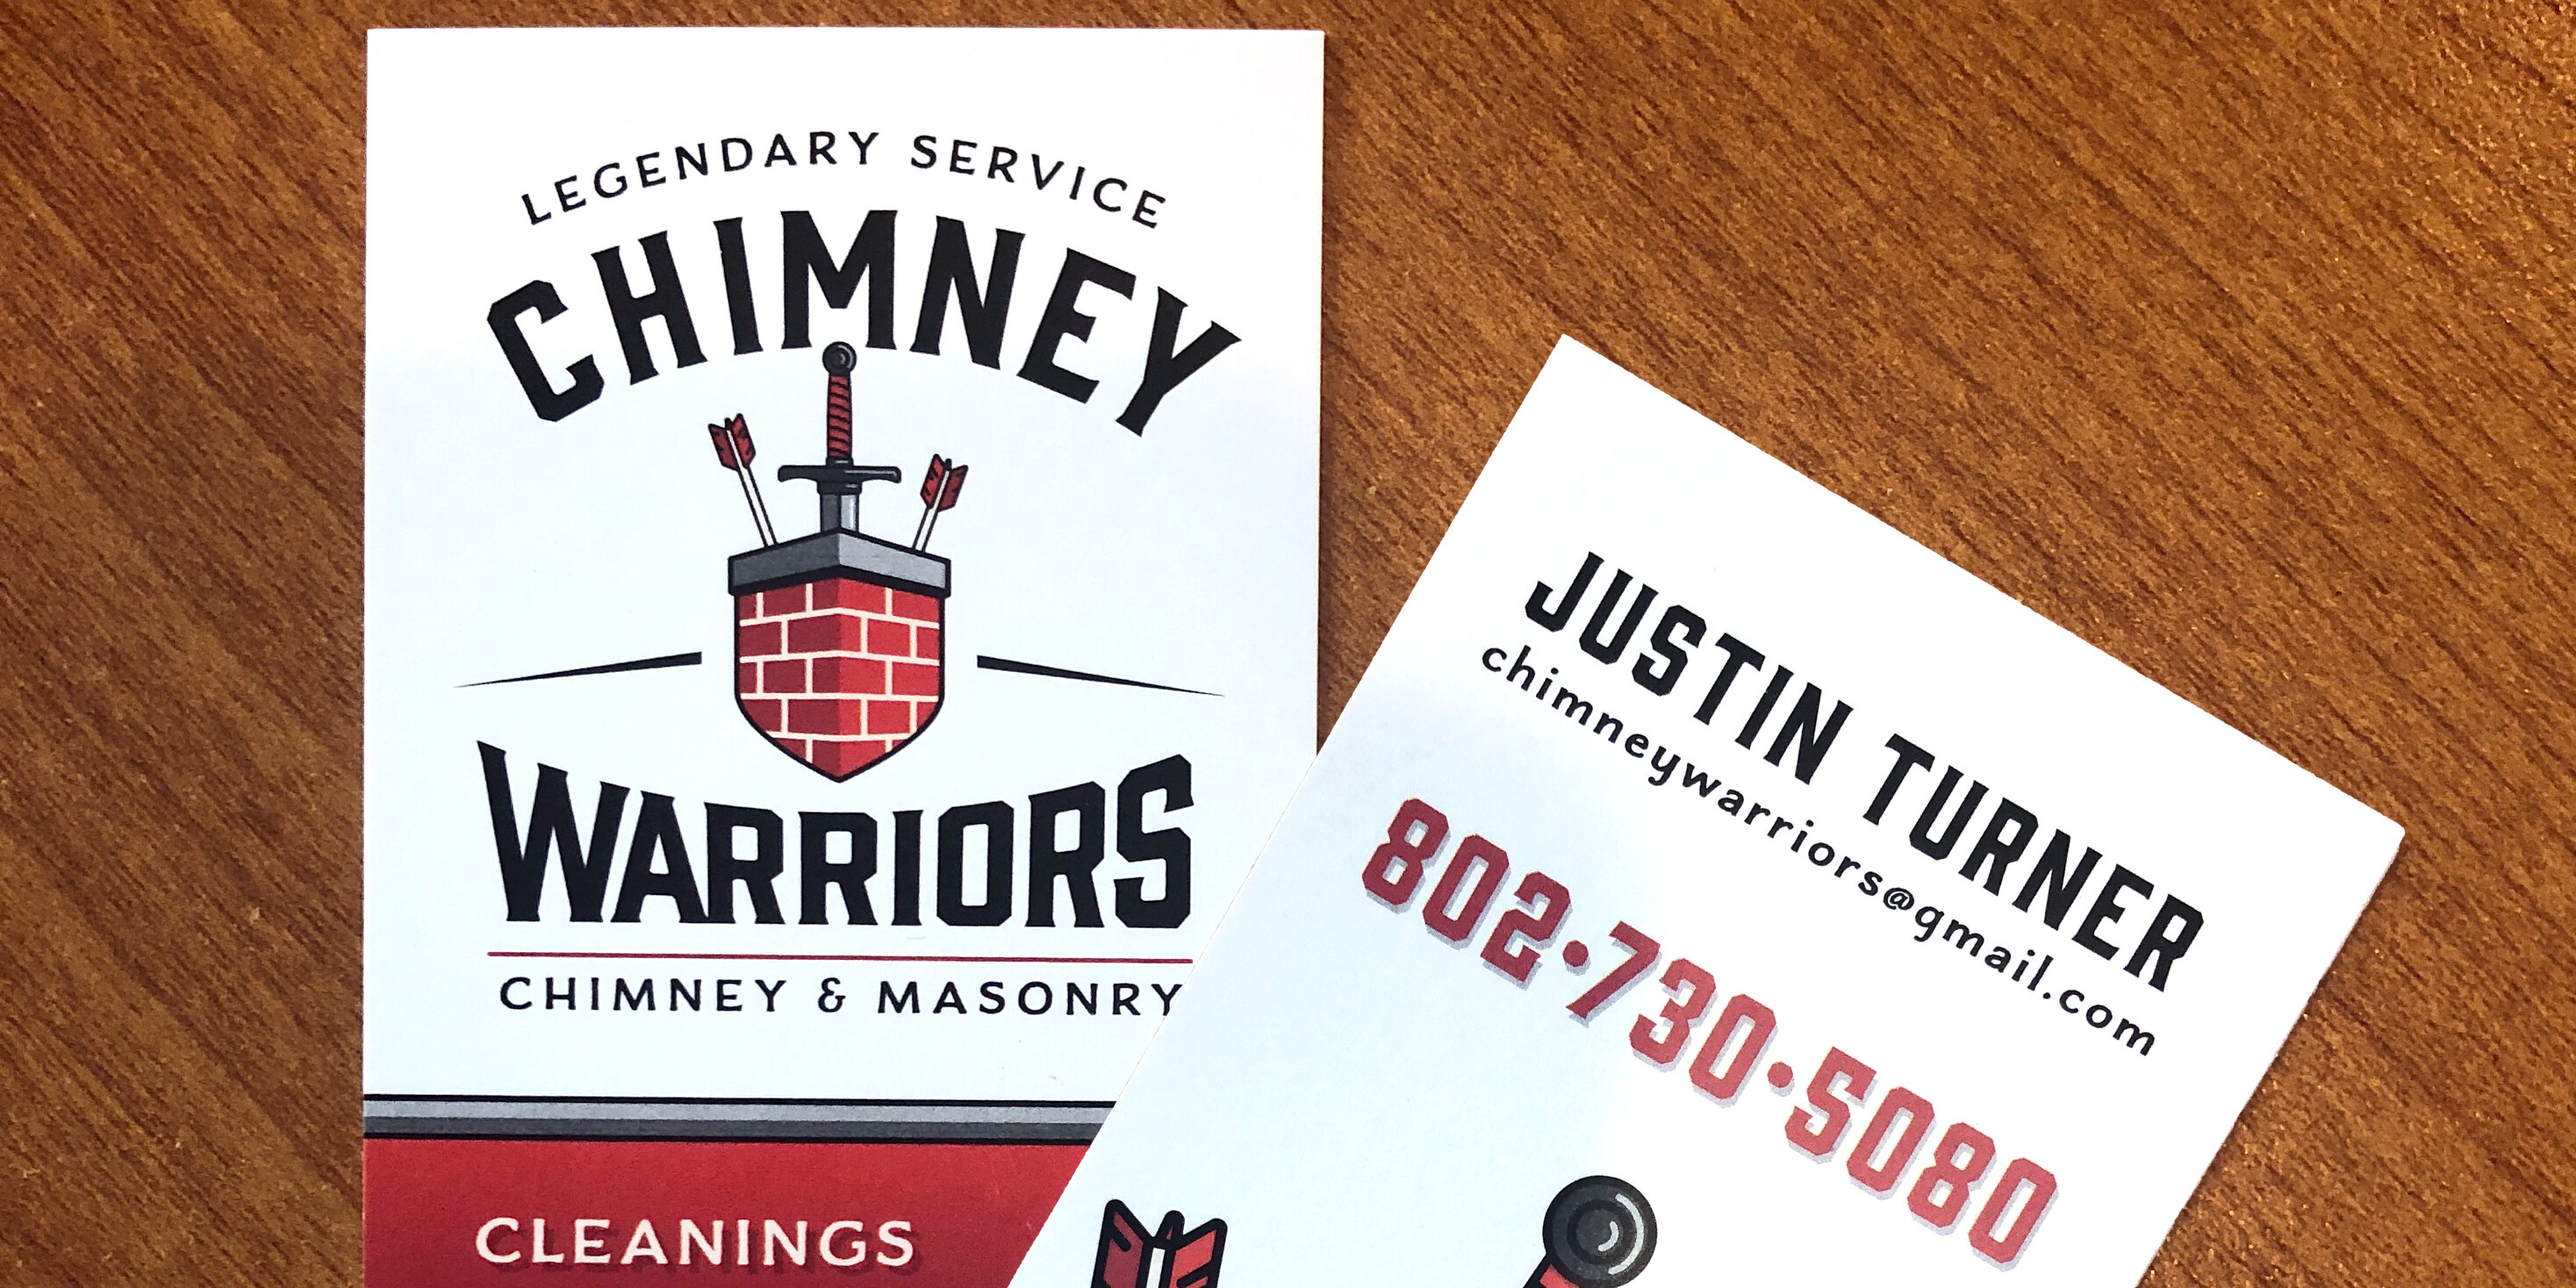 Chimney Warriors branding by Great Big Graphics